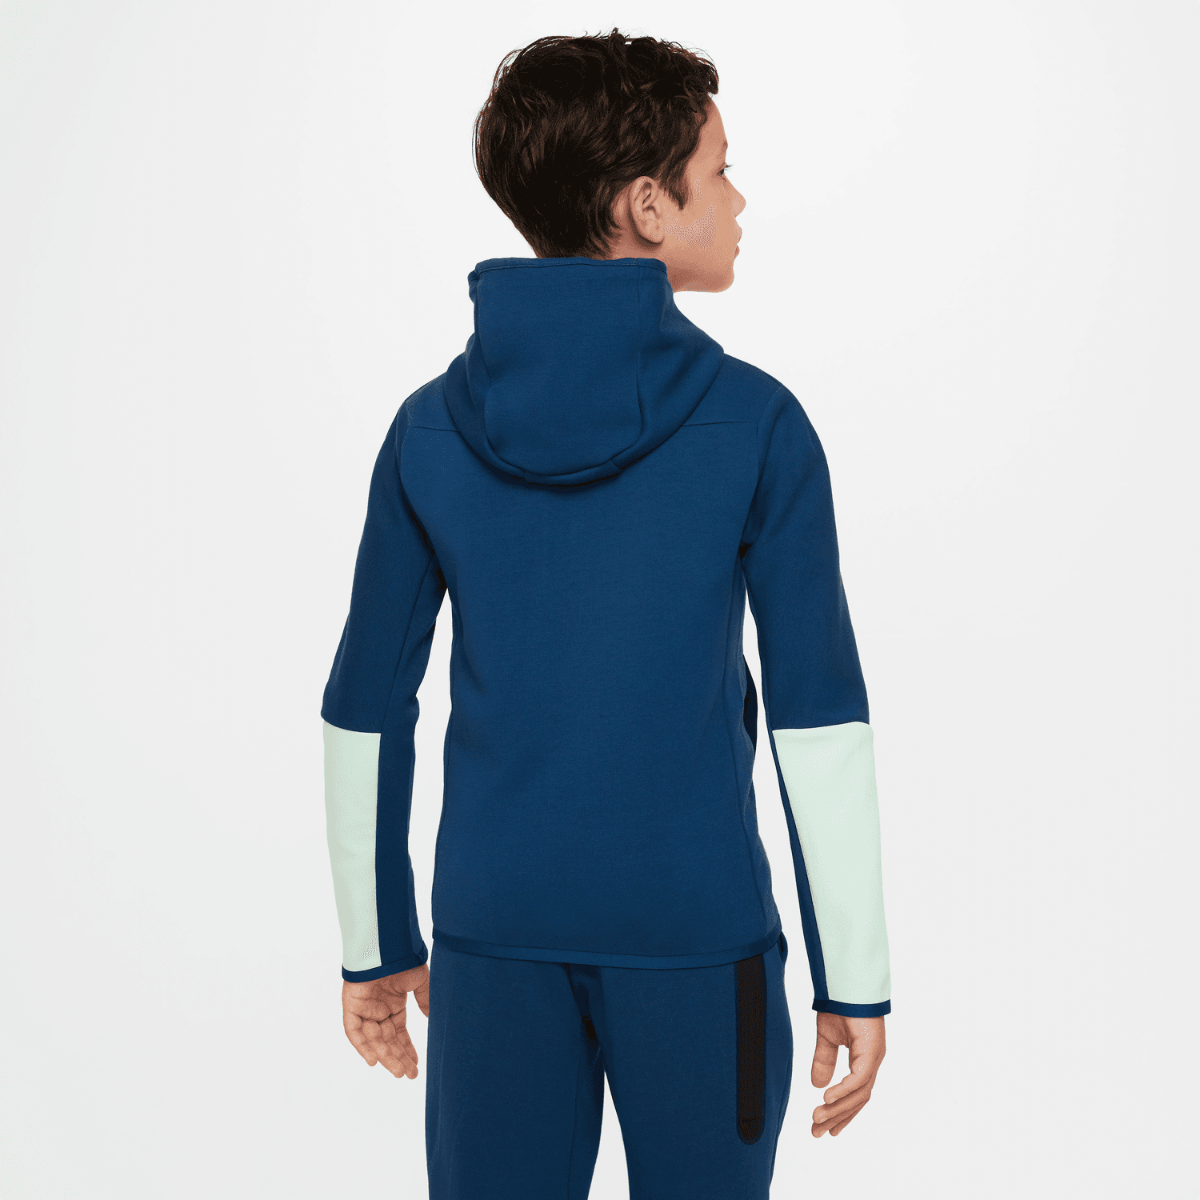 Veste Nike Tech Fleece Junior - Bleu Marine/Noir